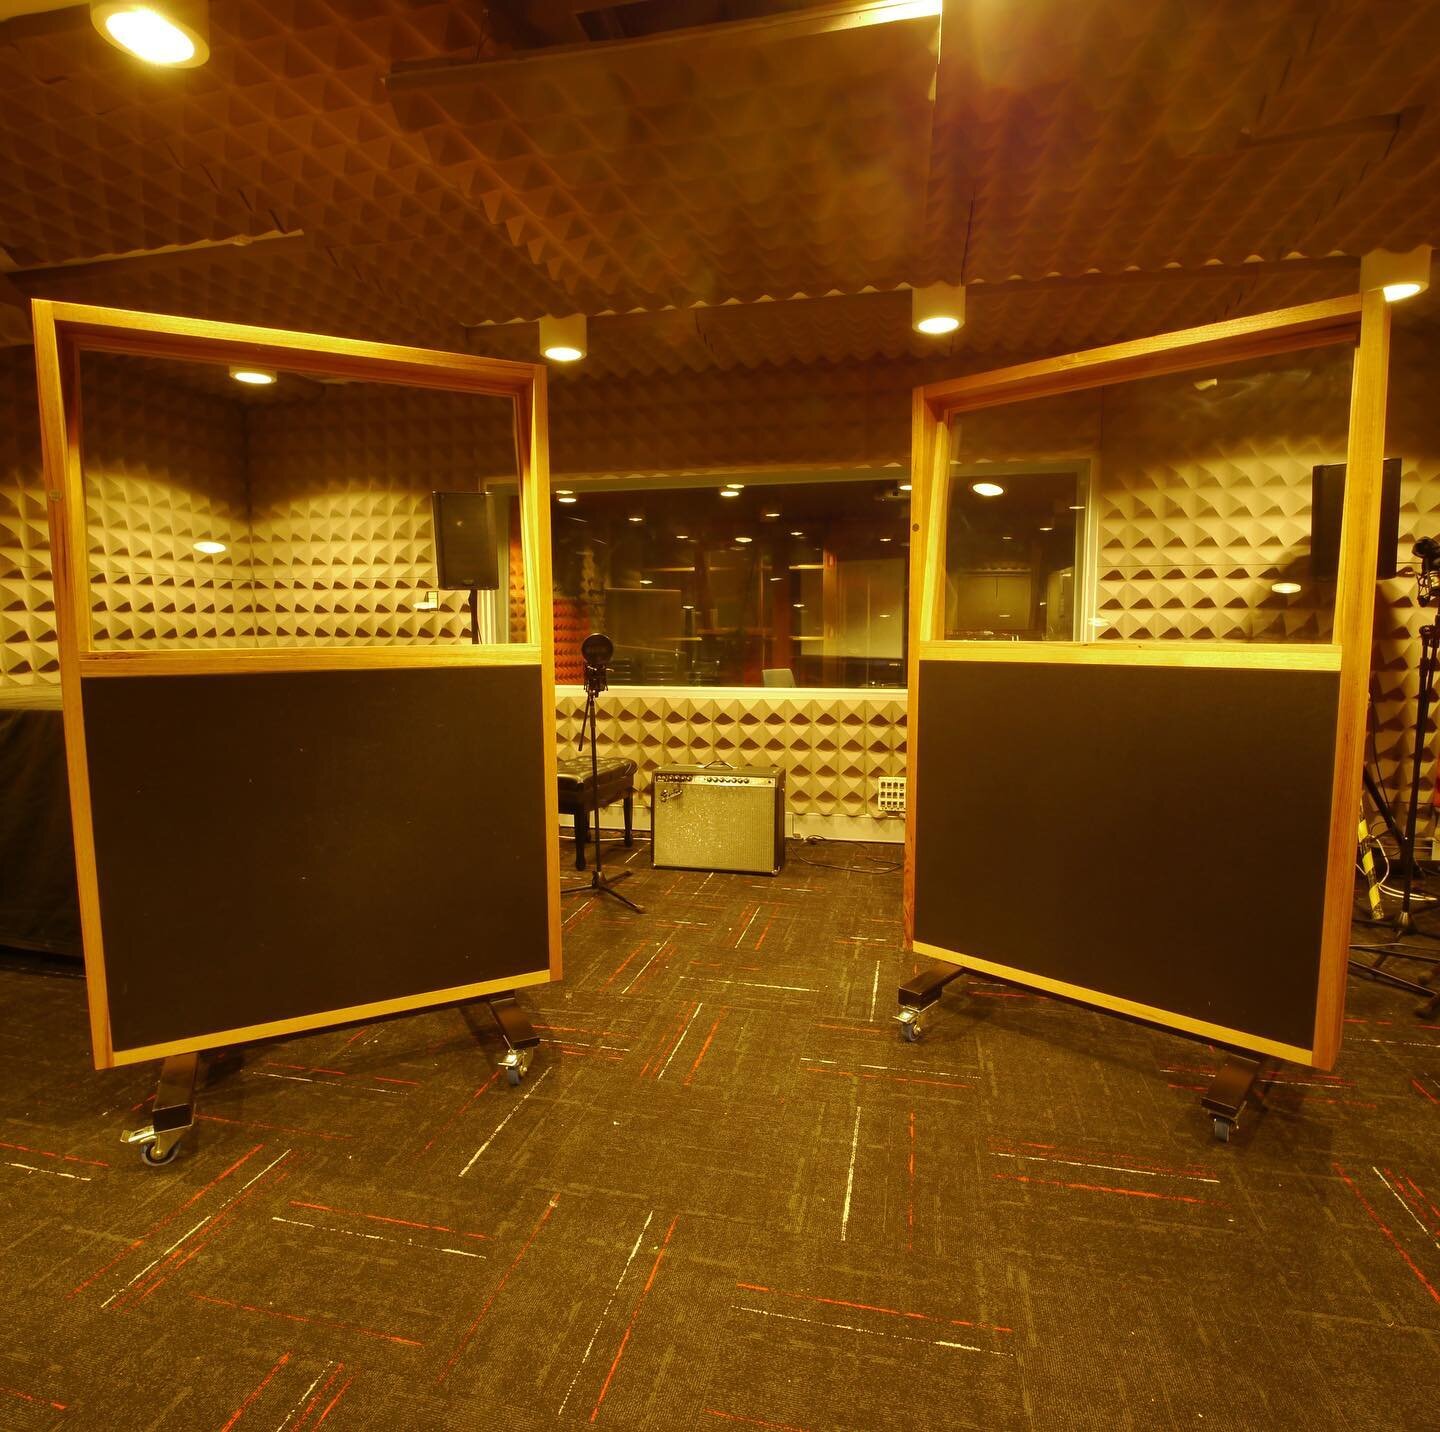 Two new studio gobos for @melbpolymusic  #exponentialacoustics #acoustics #studioacoustics #recordingstudio #studio #diffuser #diffusor #qrd #basstrap #melbournemusic #melbournemusicscene #melbournemusician #melbournemusicians #binaryamplitudediffuse